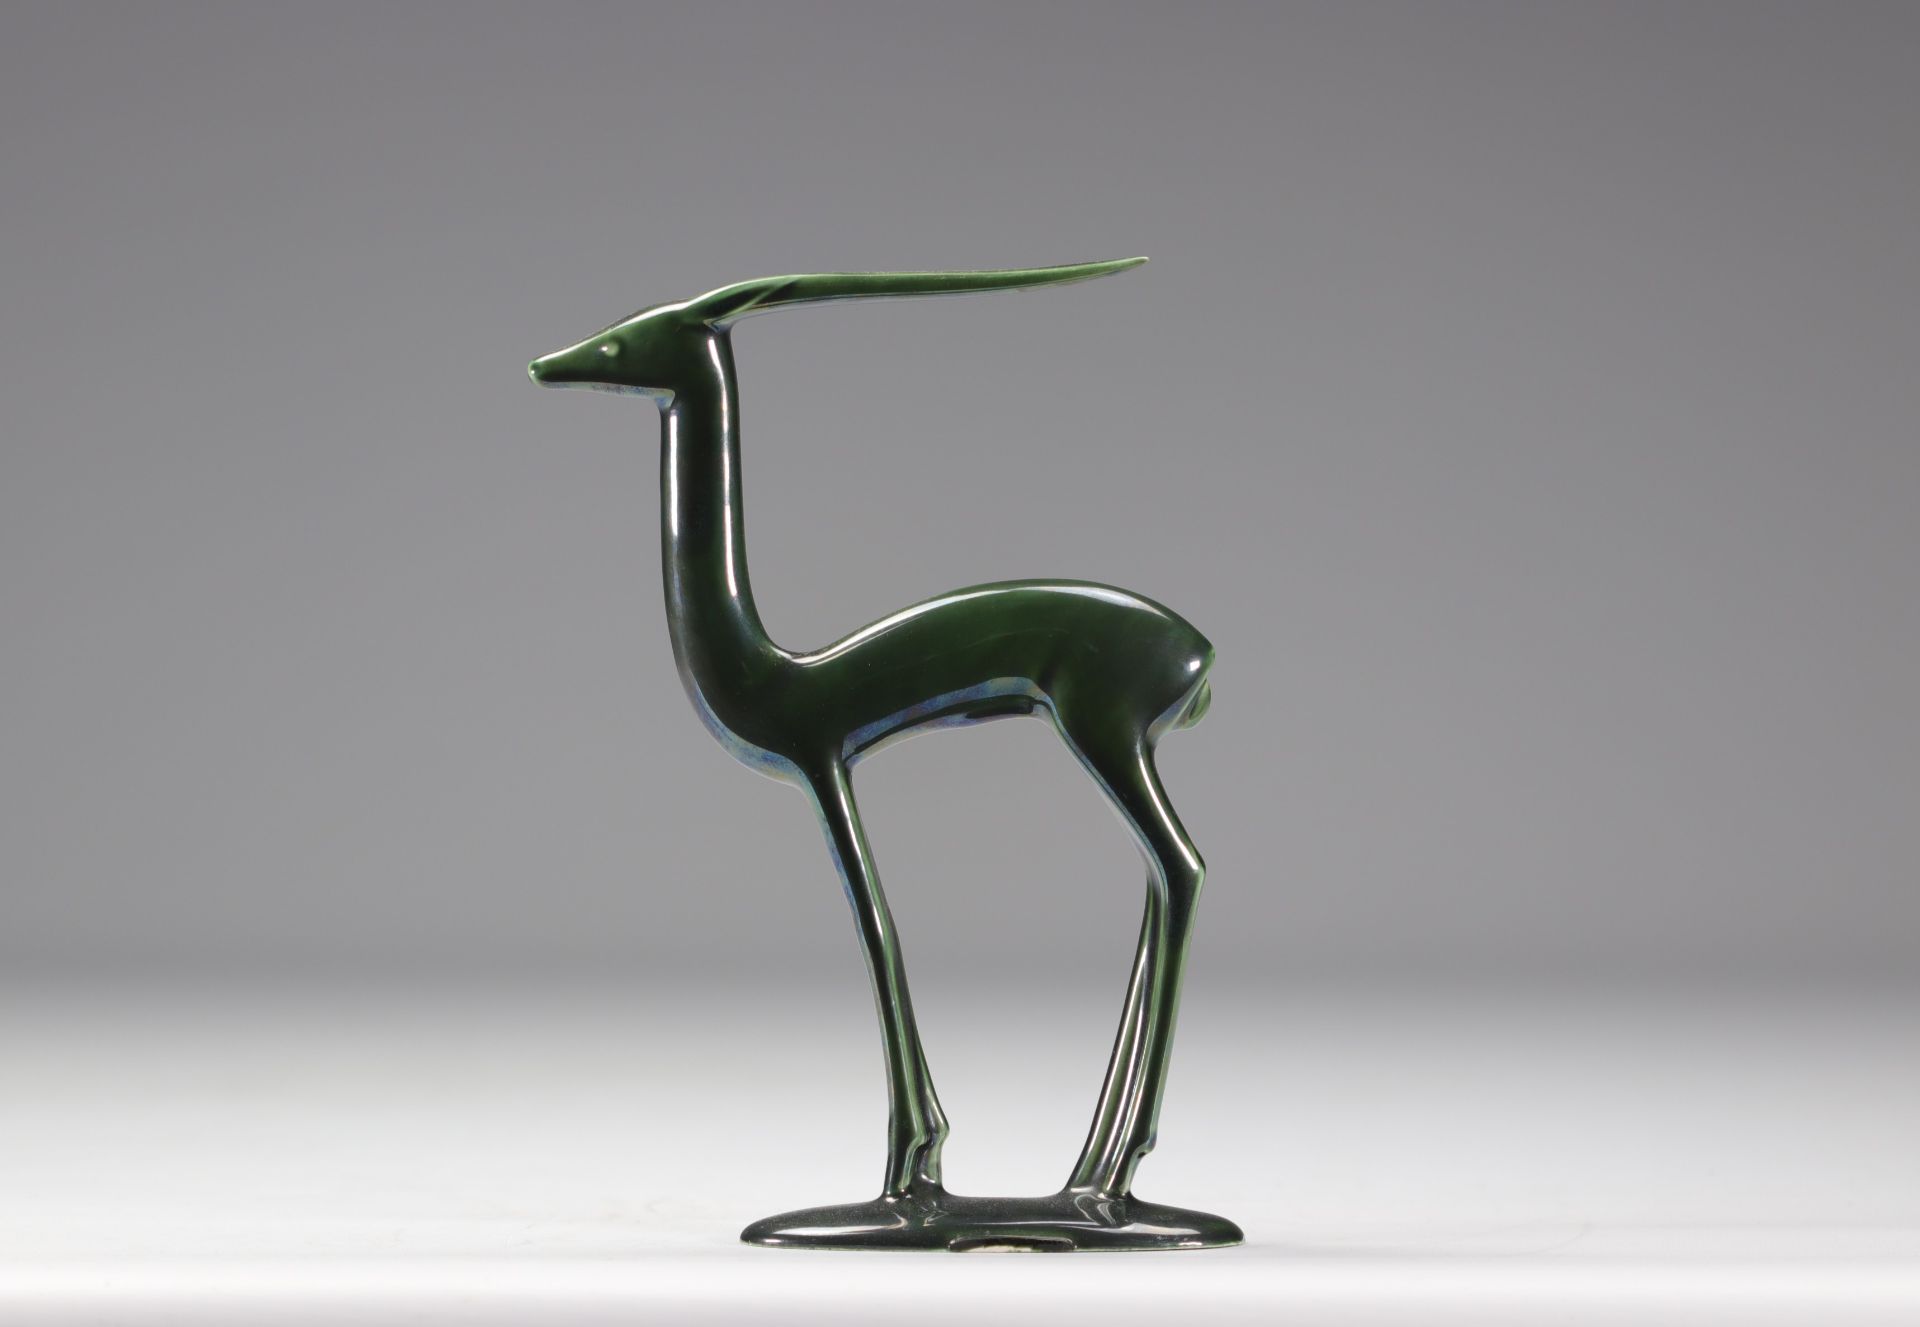 VILLEROY & BOCH Septfontaines, green earthenware gazelle - Image 2 of 3